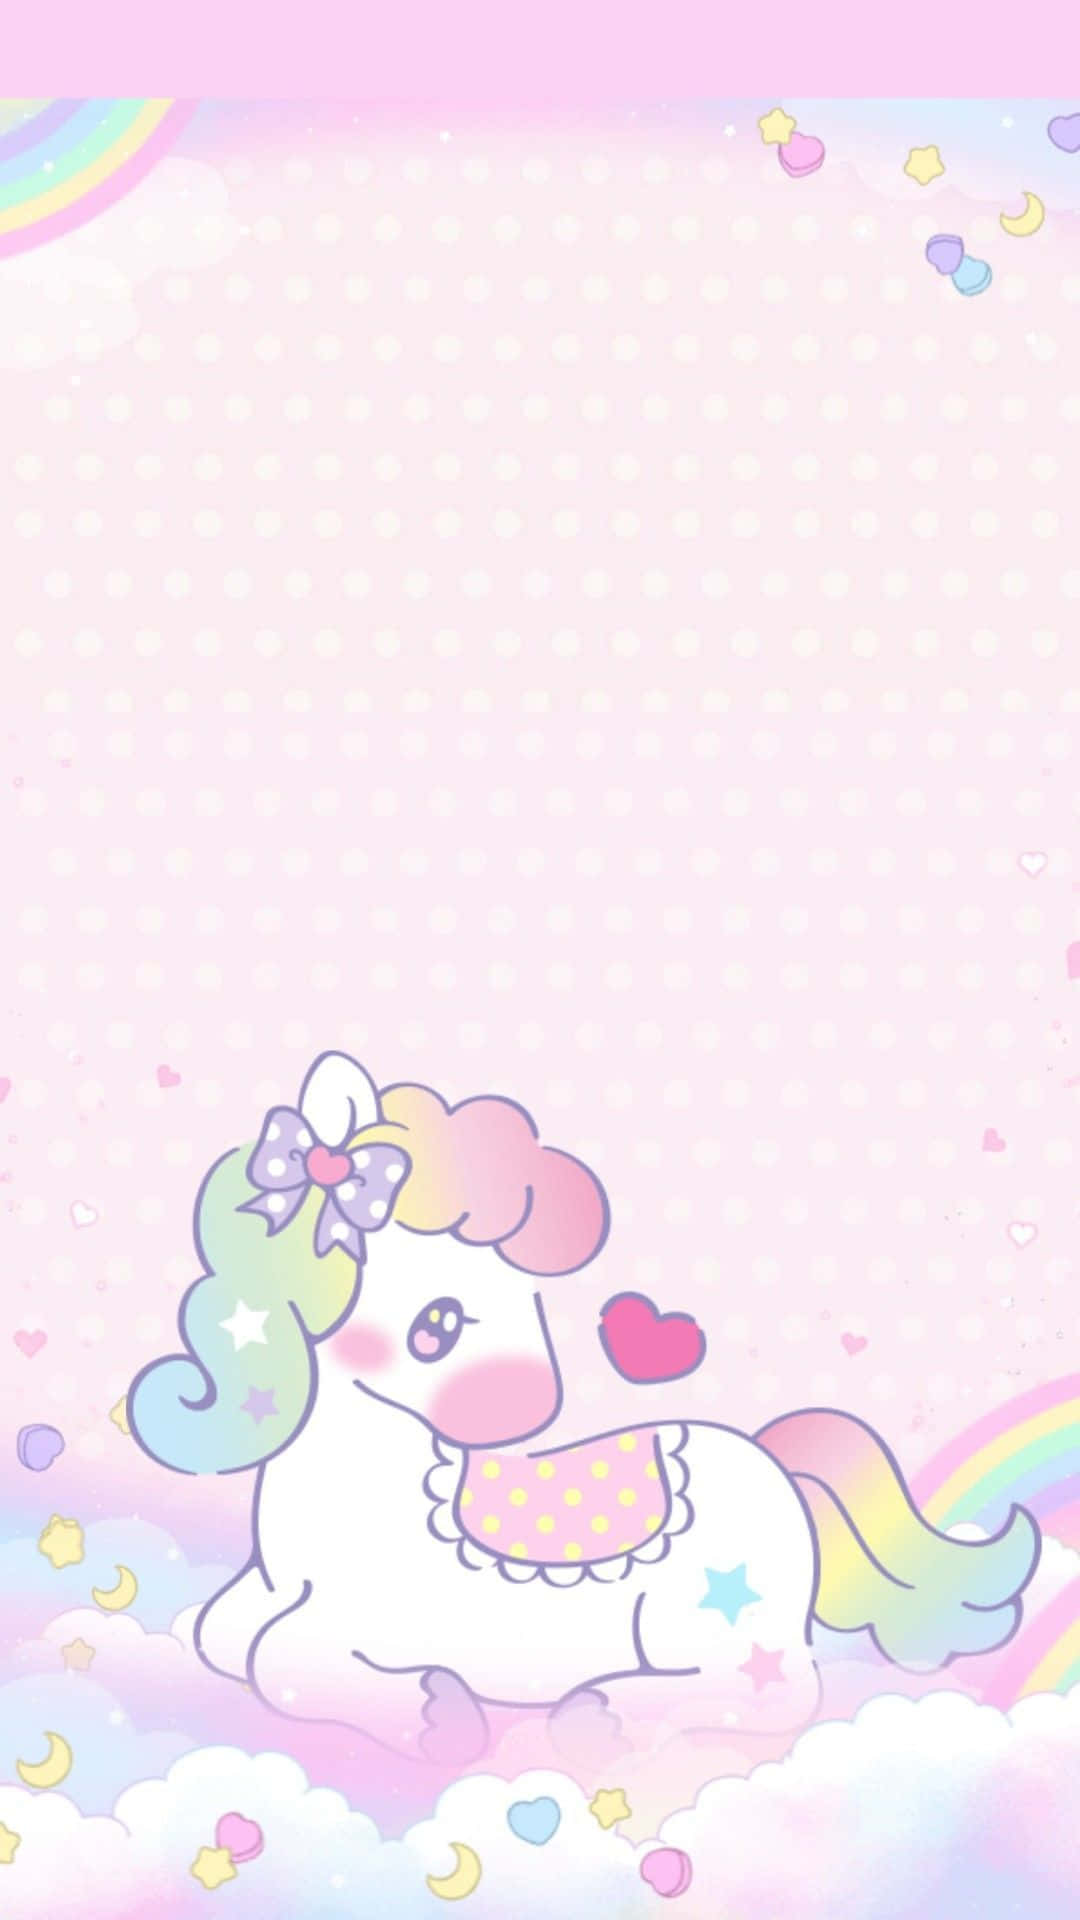 Cute Unicorn Lovely Pony Illustration Art Picture